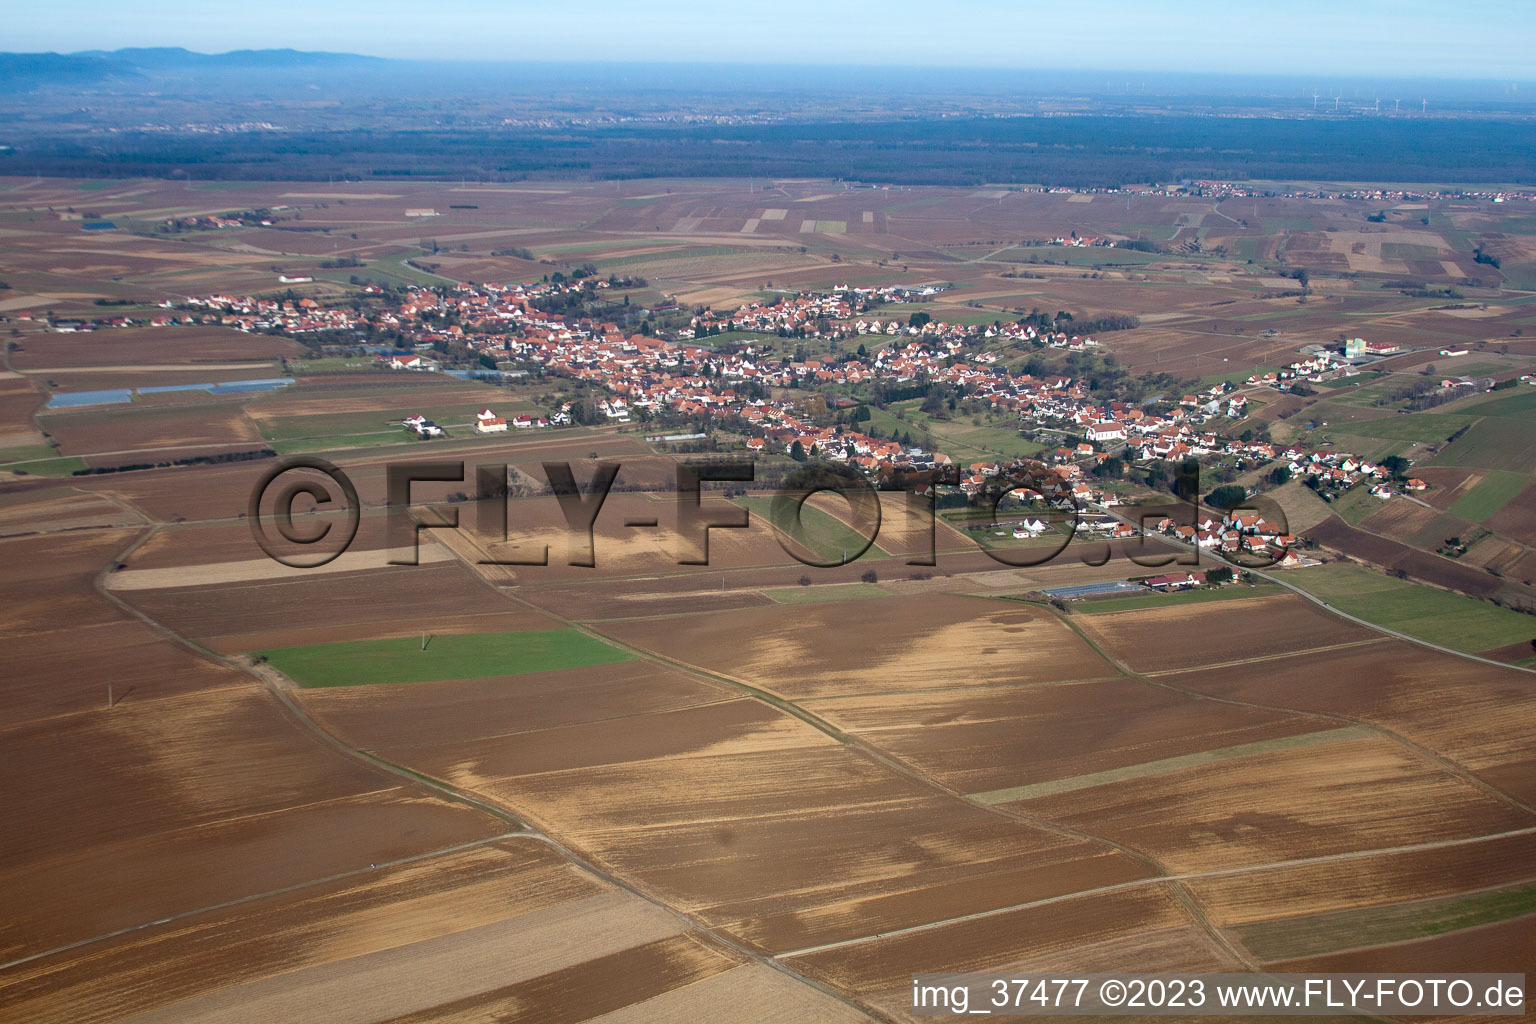 Luftbild von Seebach (Elsaß) im Bundesland Bas-Rhin, Frankreich